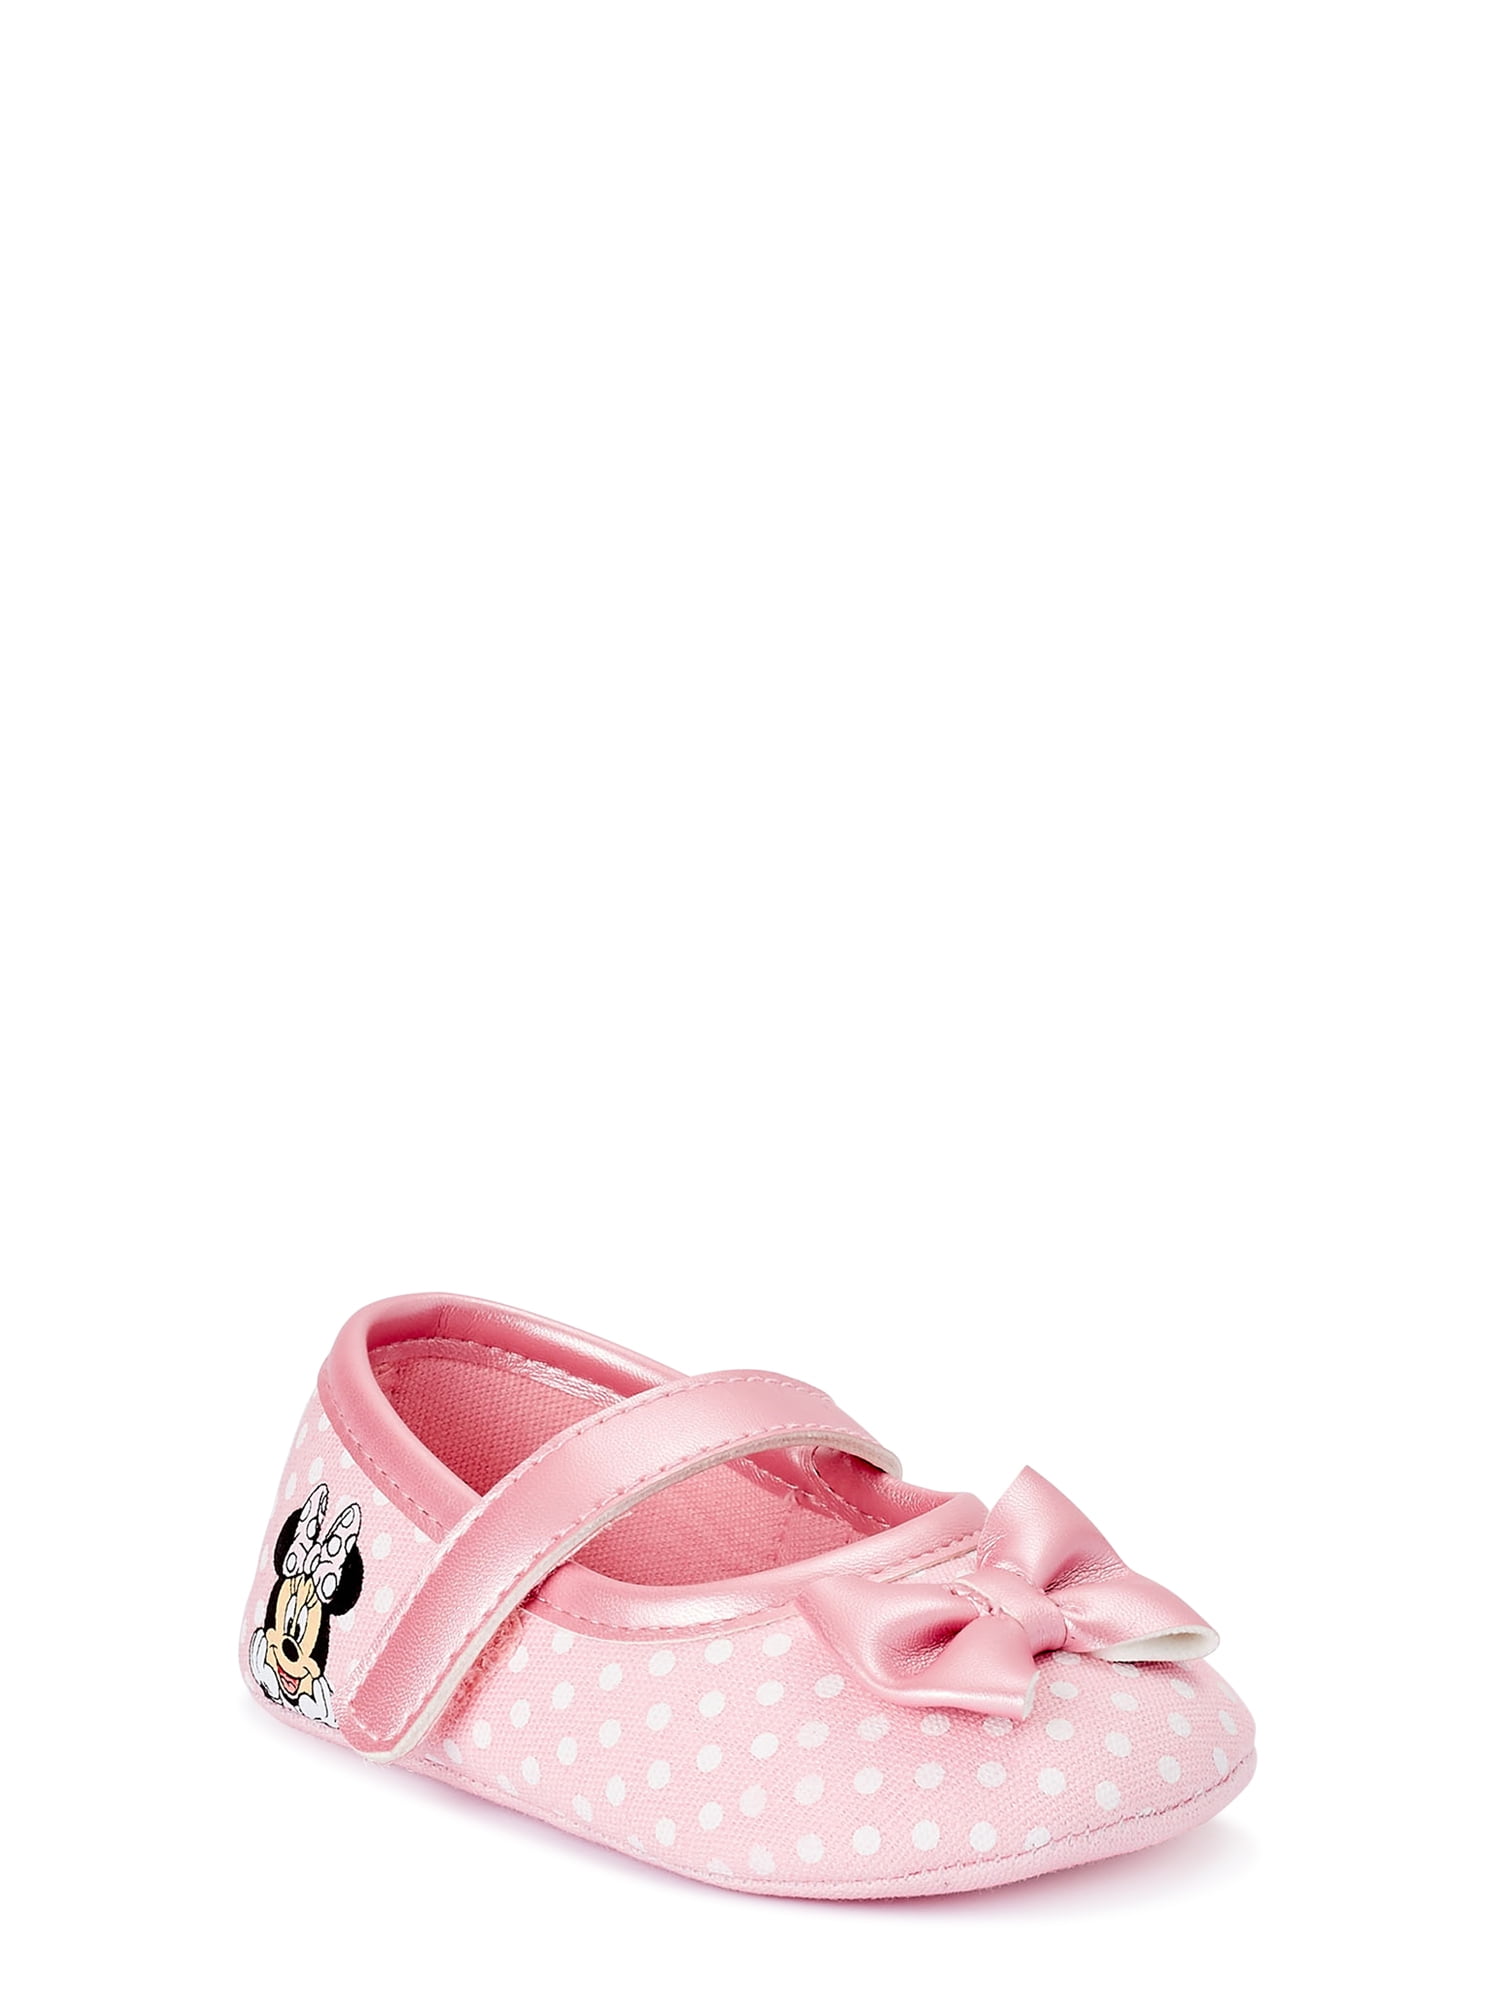 Infant Sizes 1-5 Soft Sole Leather Mary Jane Moccasins Disney Baby Girl Shoes Freshly Picked